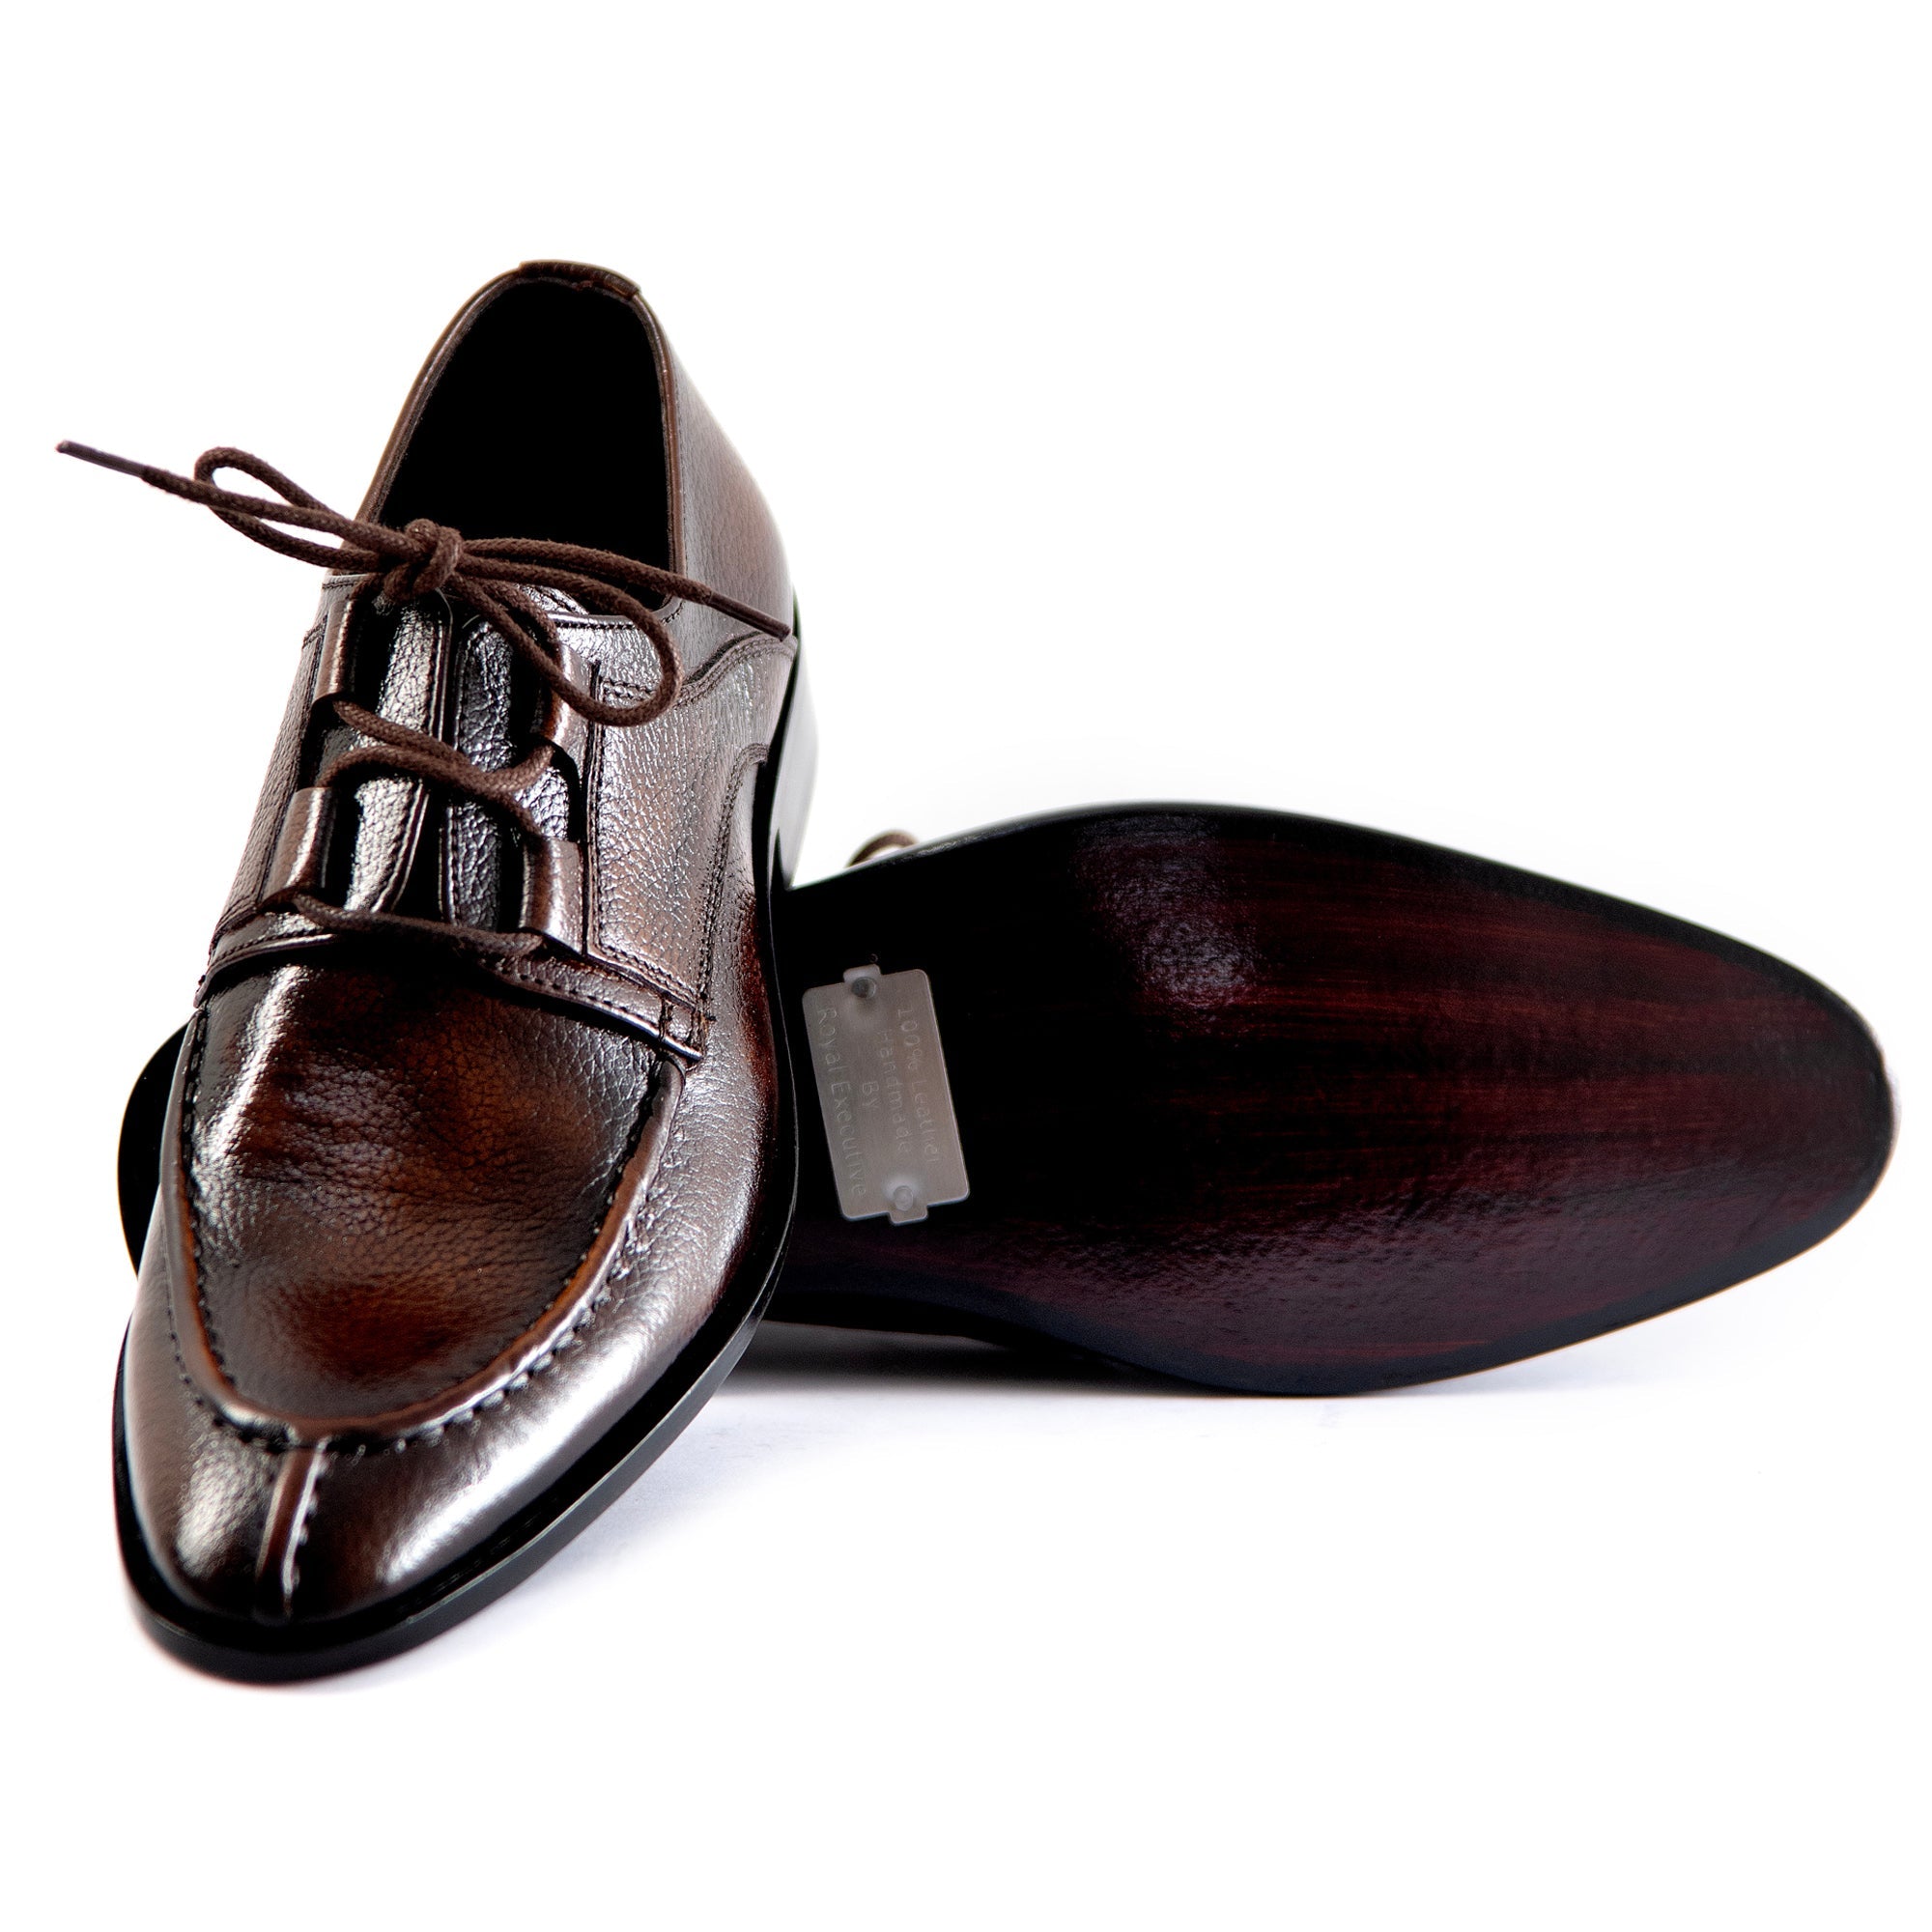 Zag Naki - Premium Shoes from royalstepshops - Just Rs.9000! Shop now at ROYAL STEP